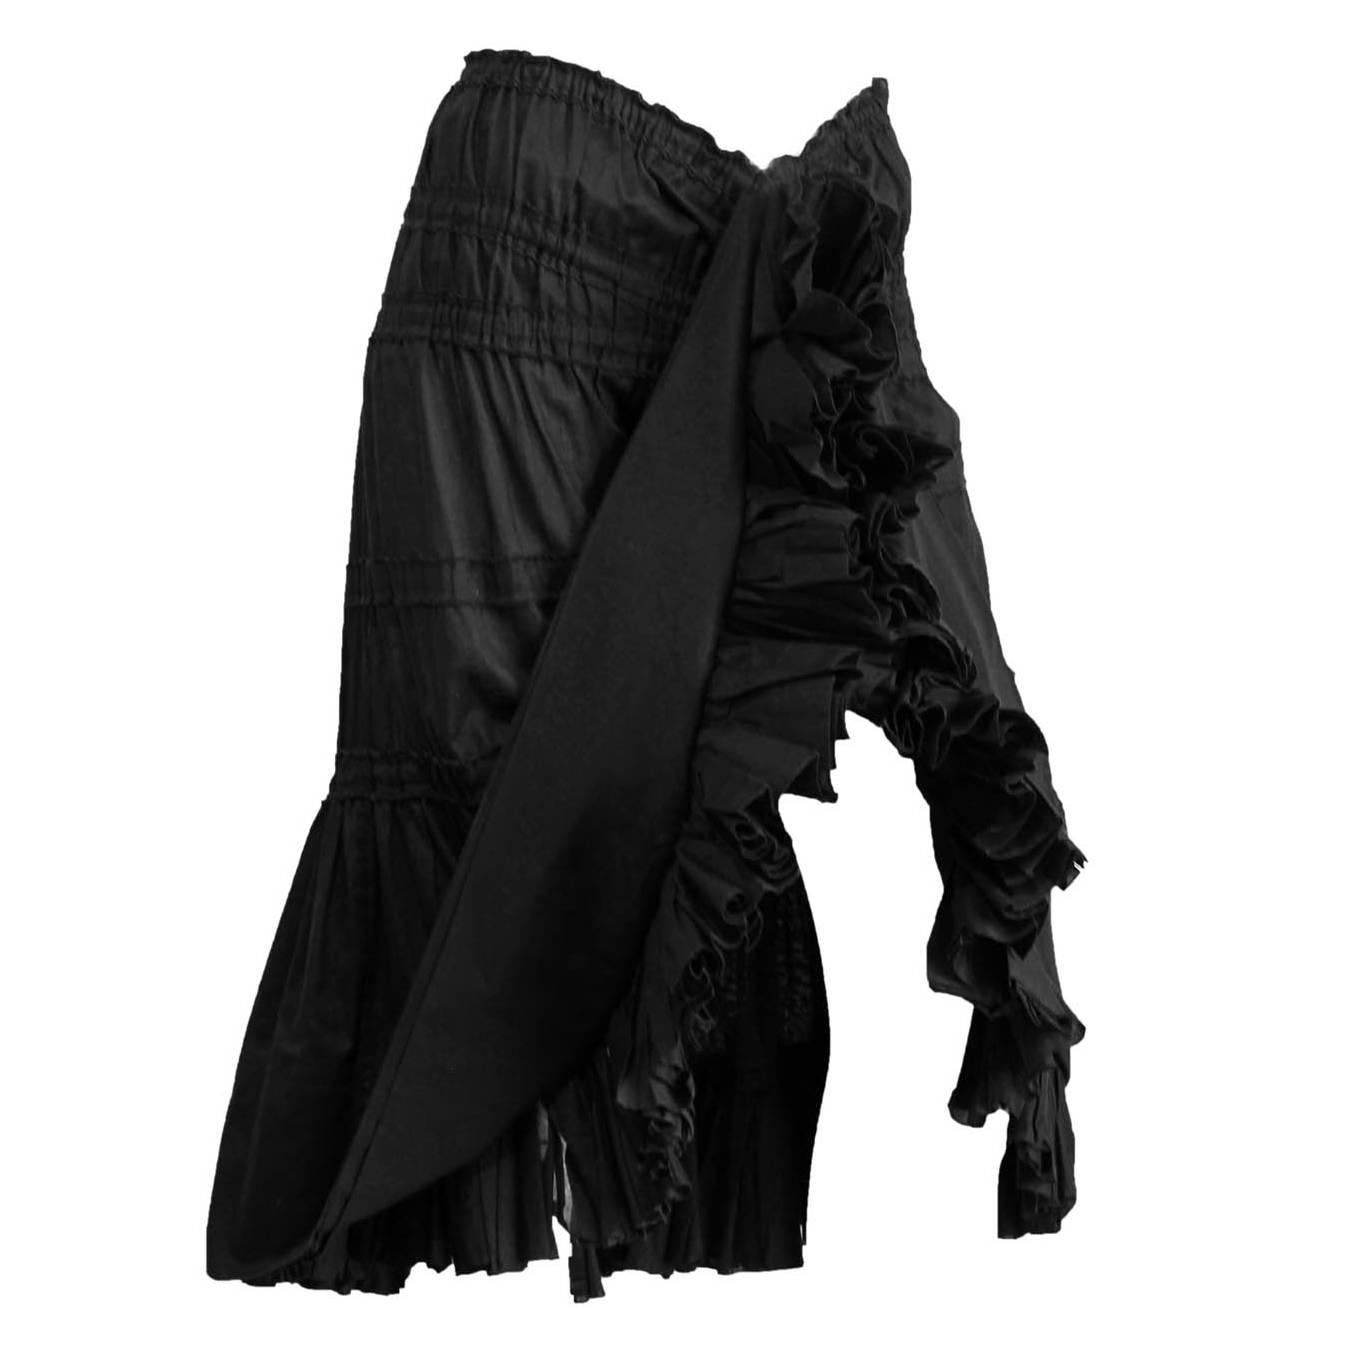 Free Shipping: Tom Ford's YSL Rive Gauche FW 2001 Black Gypsy Boho Runway Skirt!